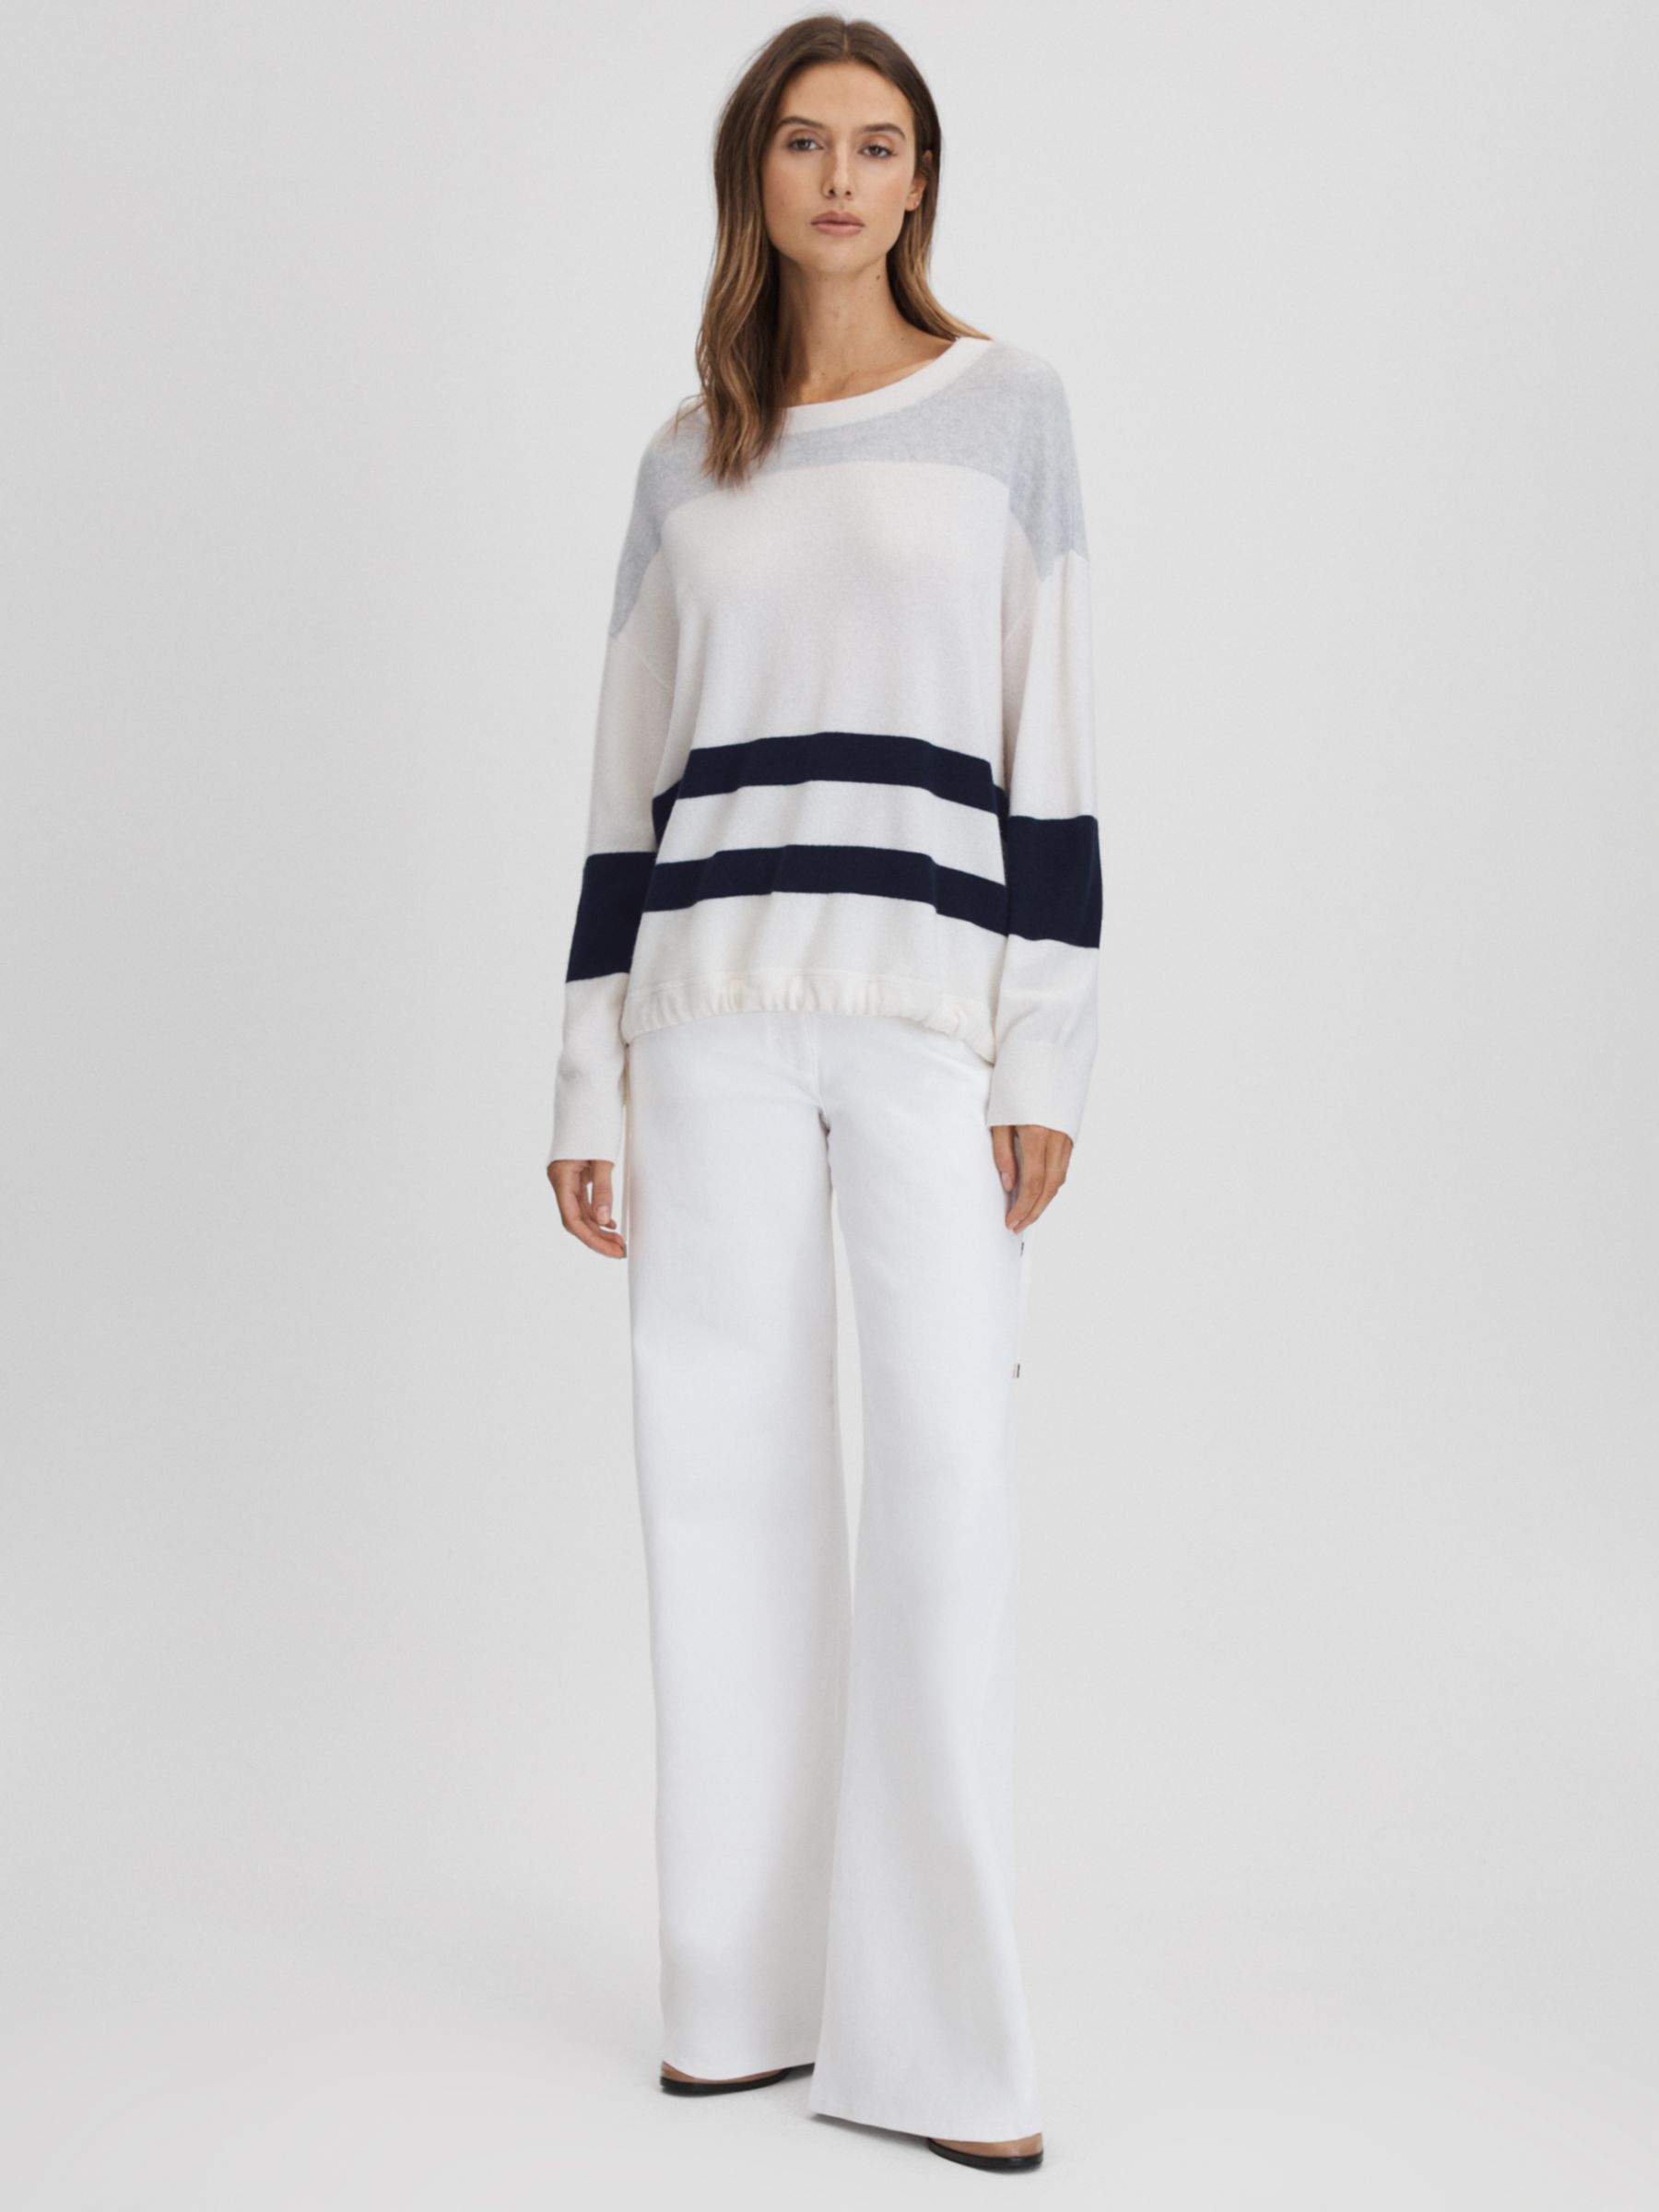 Buy Reiss Allegra Wool and Cashmere Blend Stripe Jumper, White/Grey Online at johnlewis.com